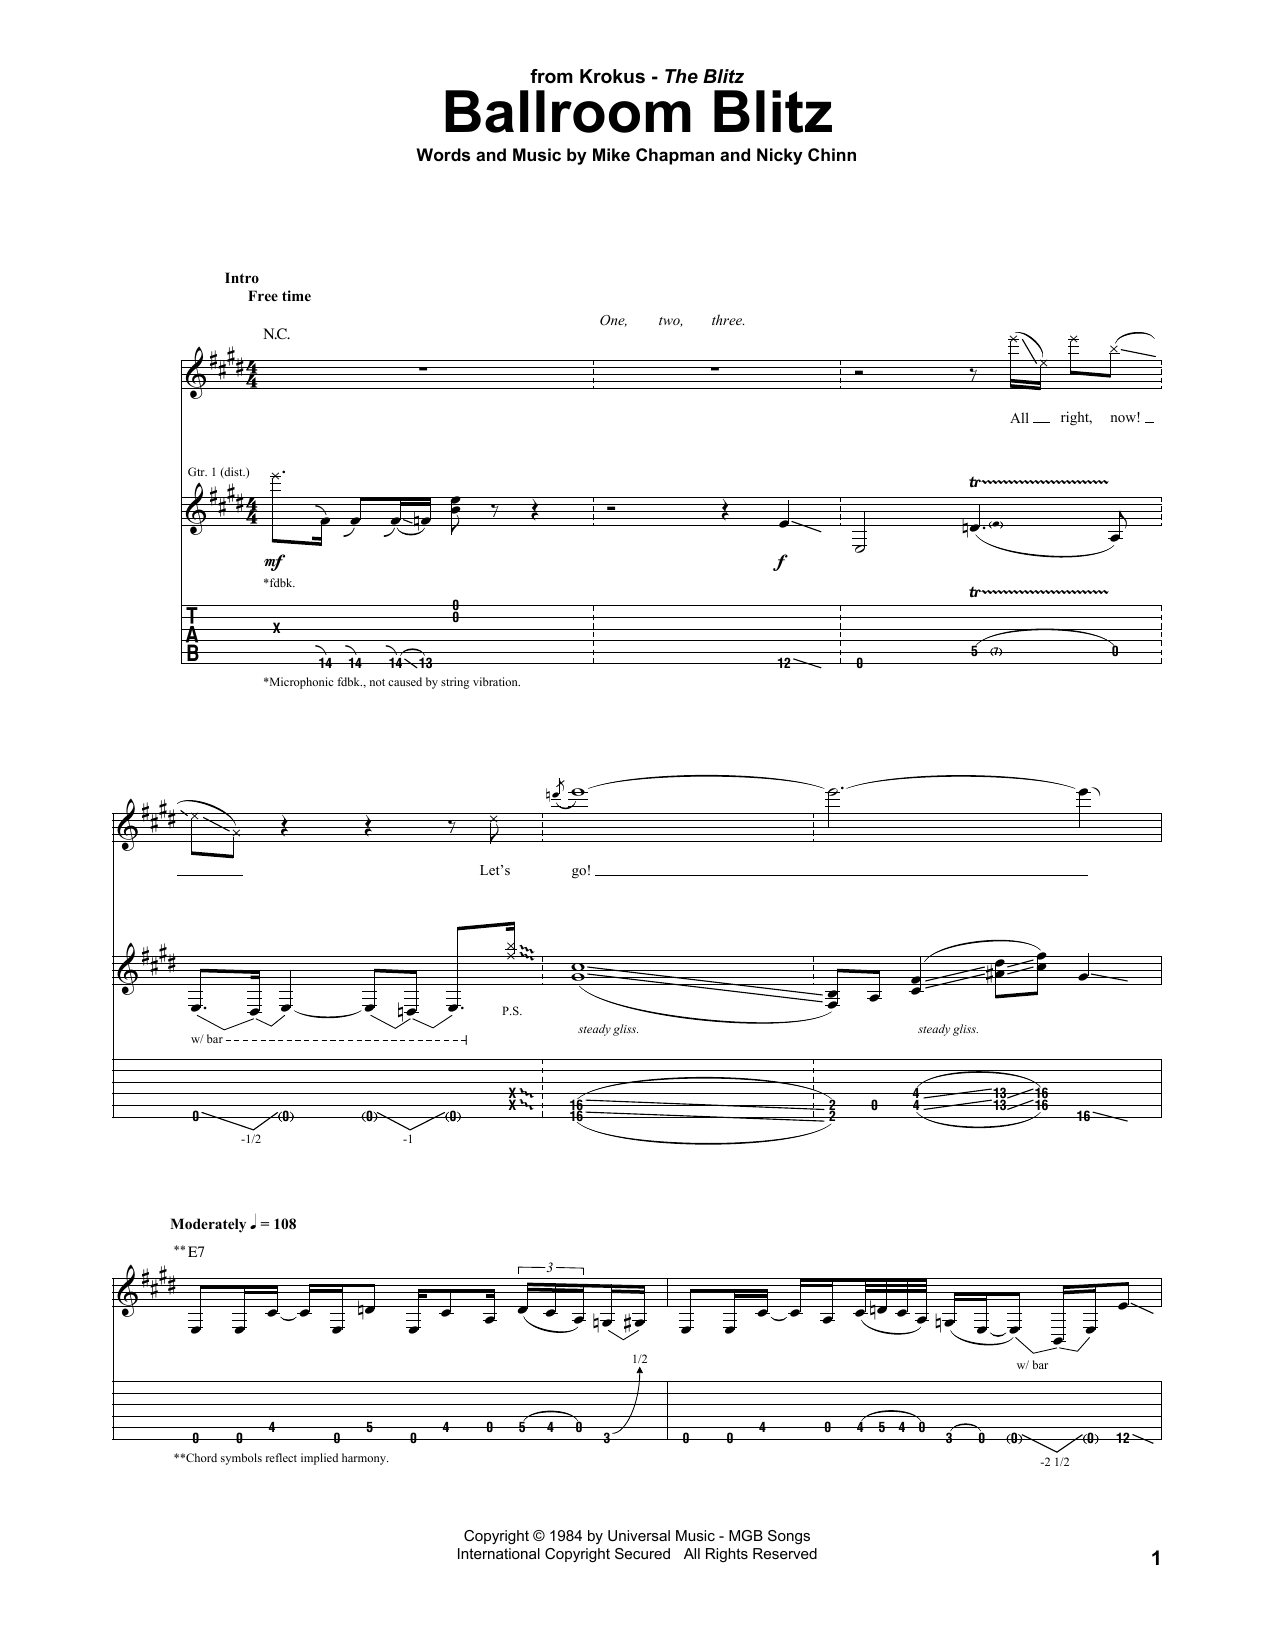 Krokus Ballroom Blitz Sheet Music Notes & Chords for Guitar Tab - Download or Print PDF